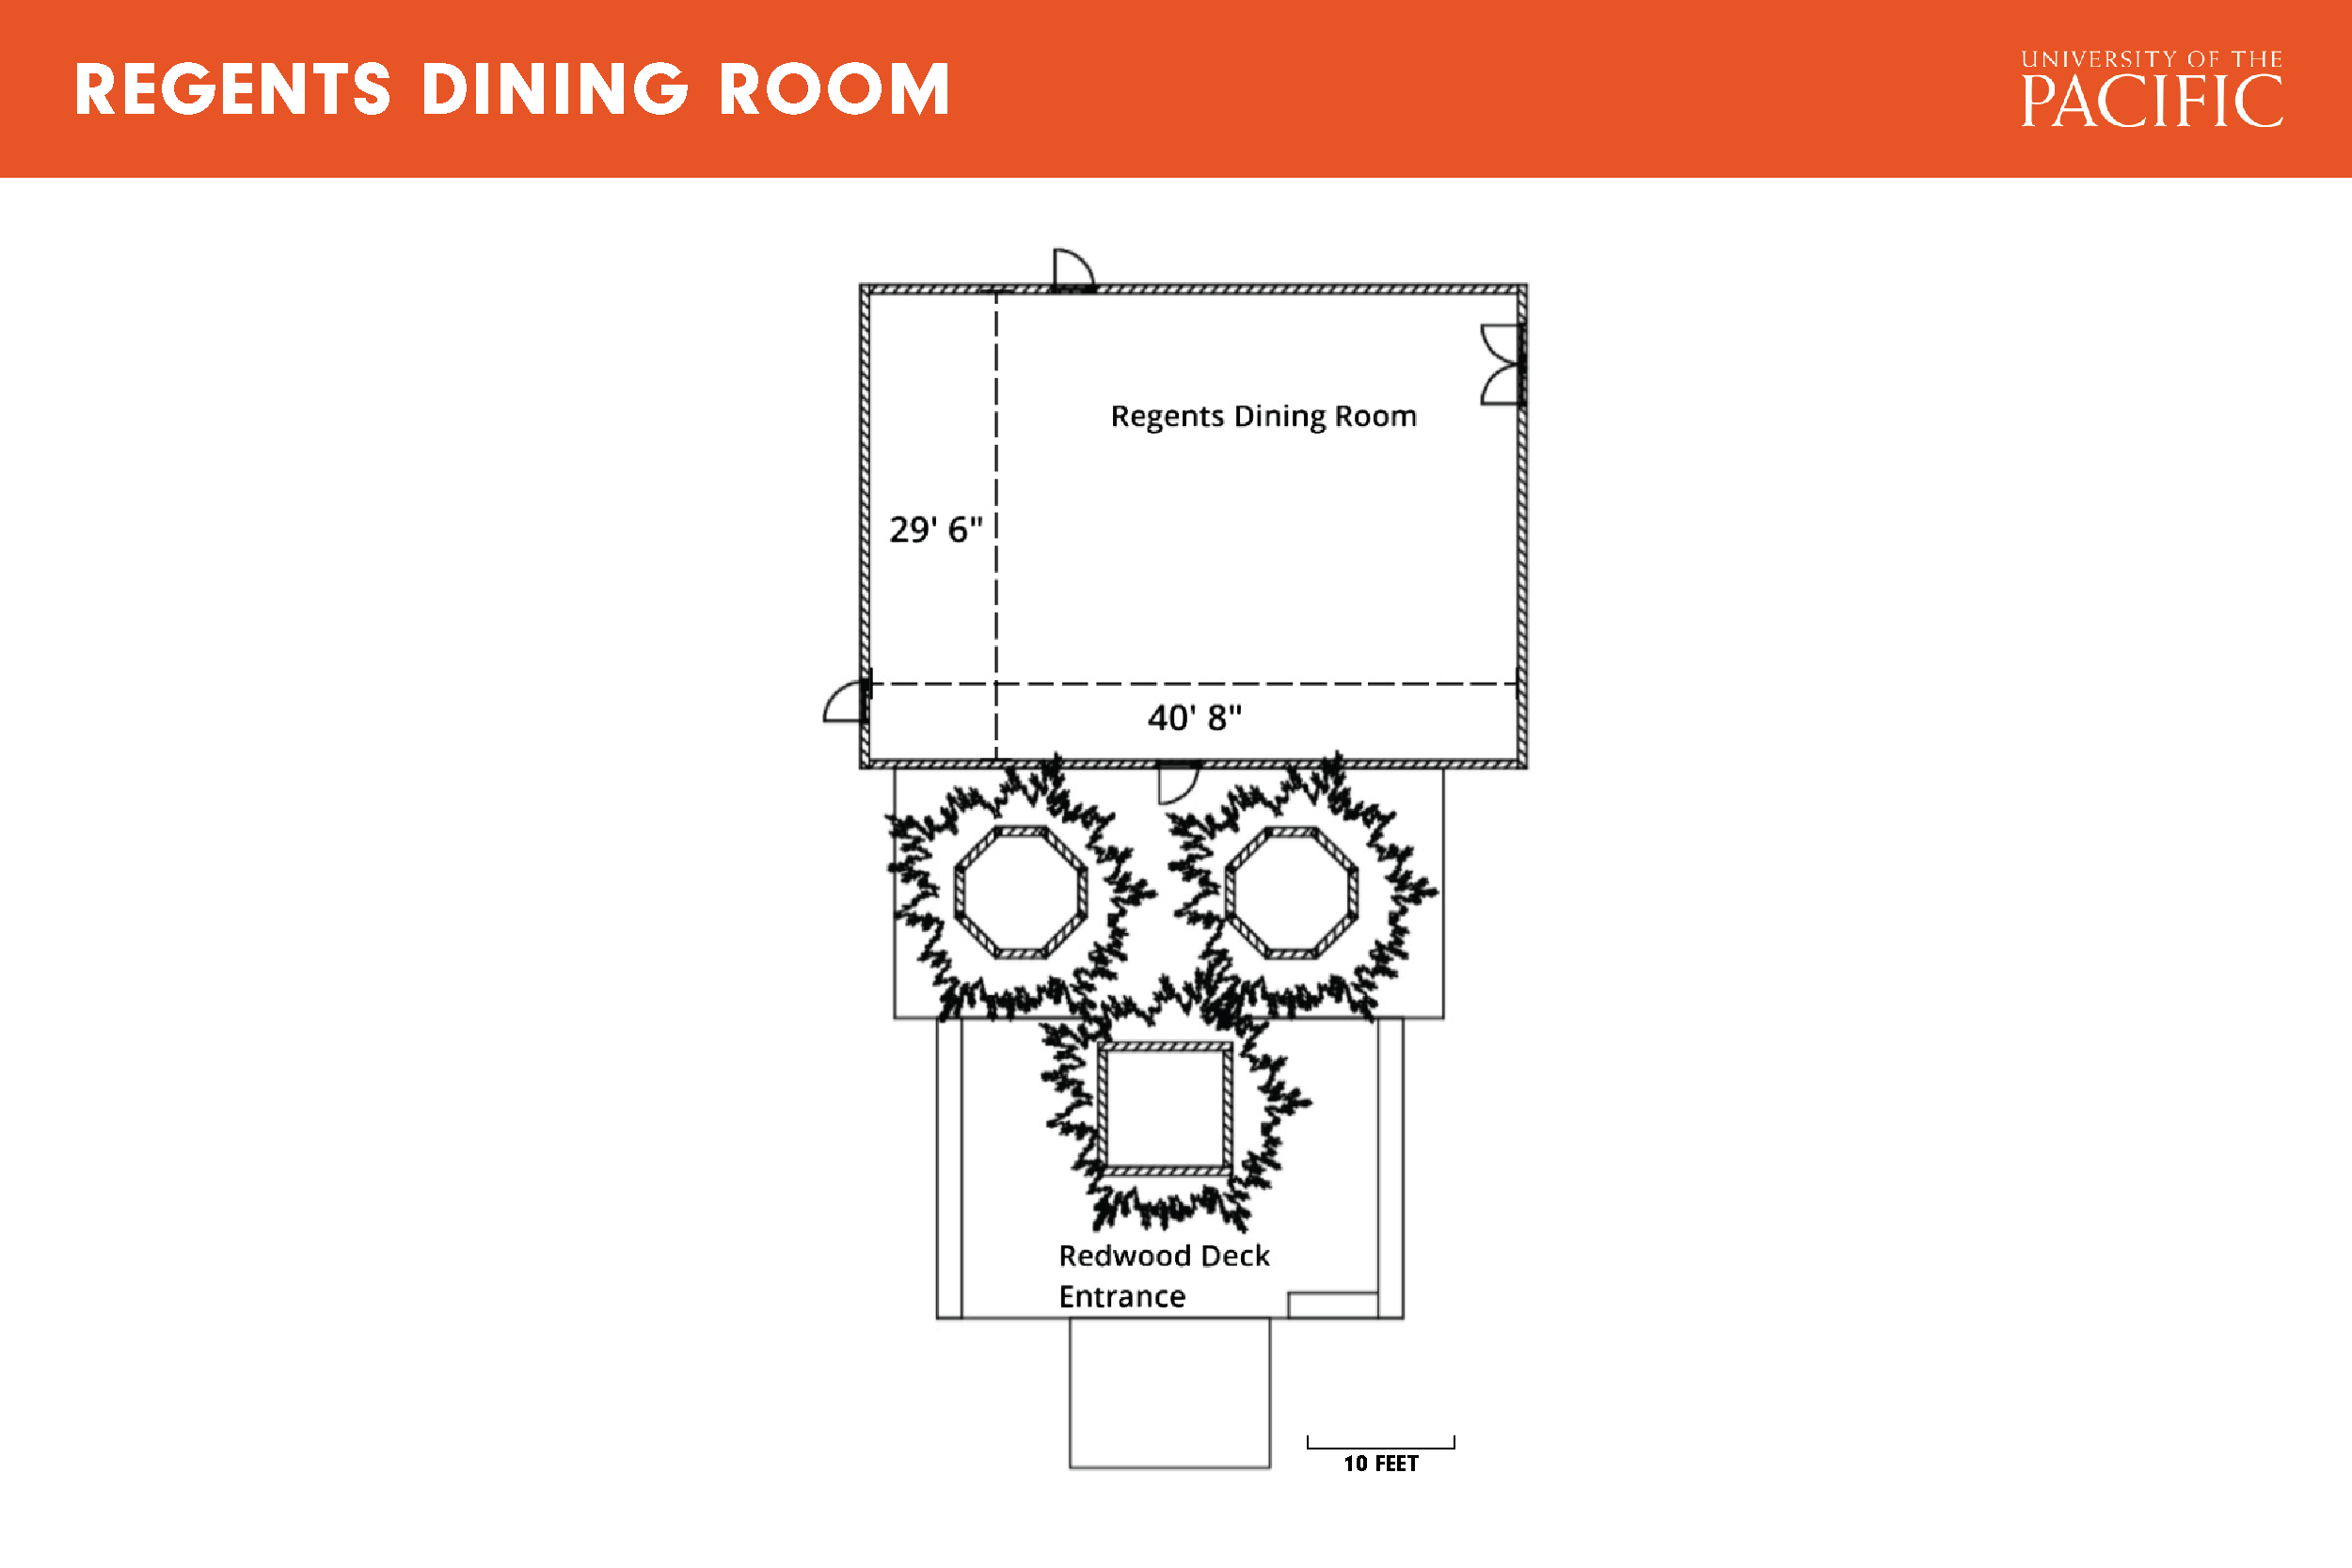 Regents Dining Room floor plan